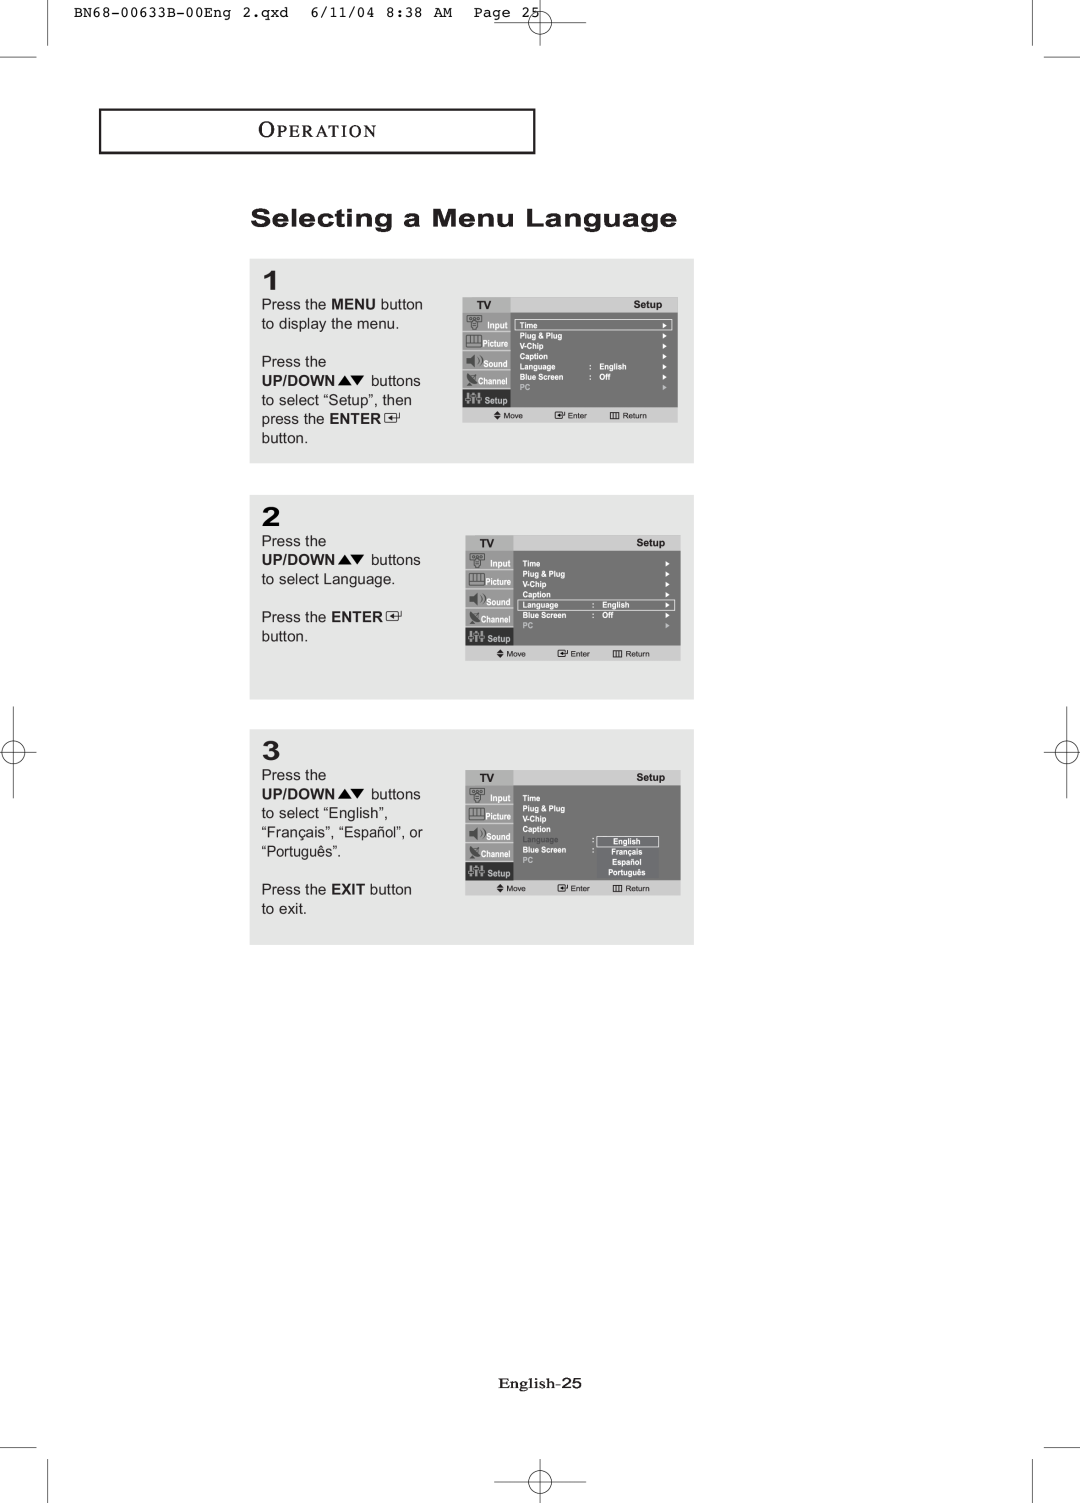 Samsung LT-P1545 manual Selecting a Menu Language, Op E R At I O N, BN68-00633B-00Eng 2.qxd 6/11/04 838 AM Page, English-25 